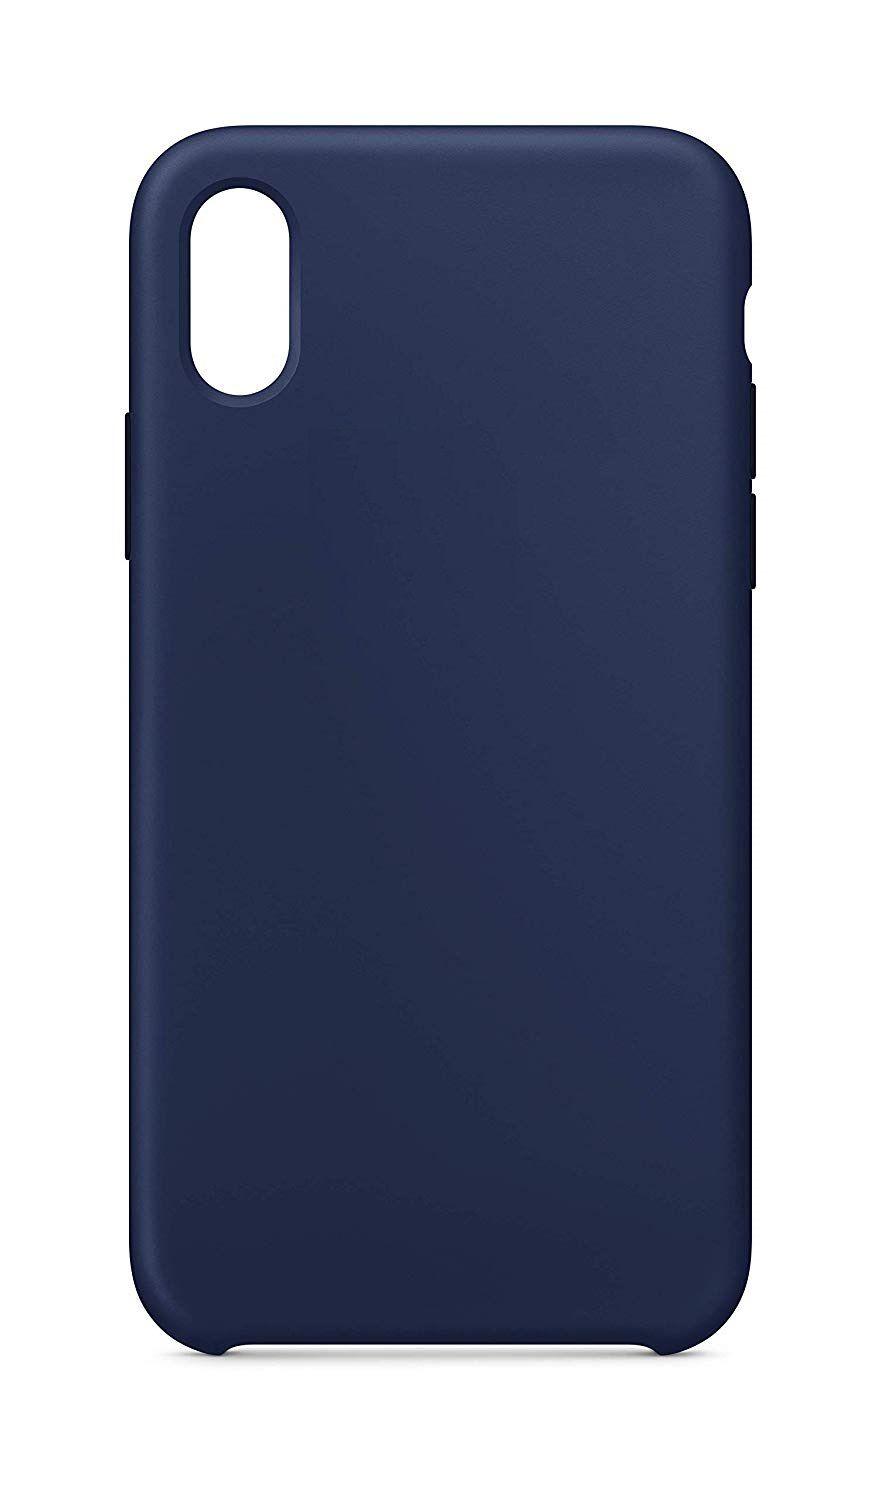 Silicone case Iphone X dark blue